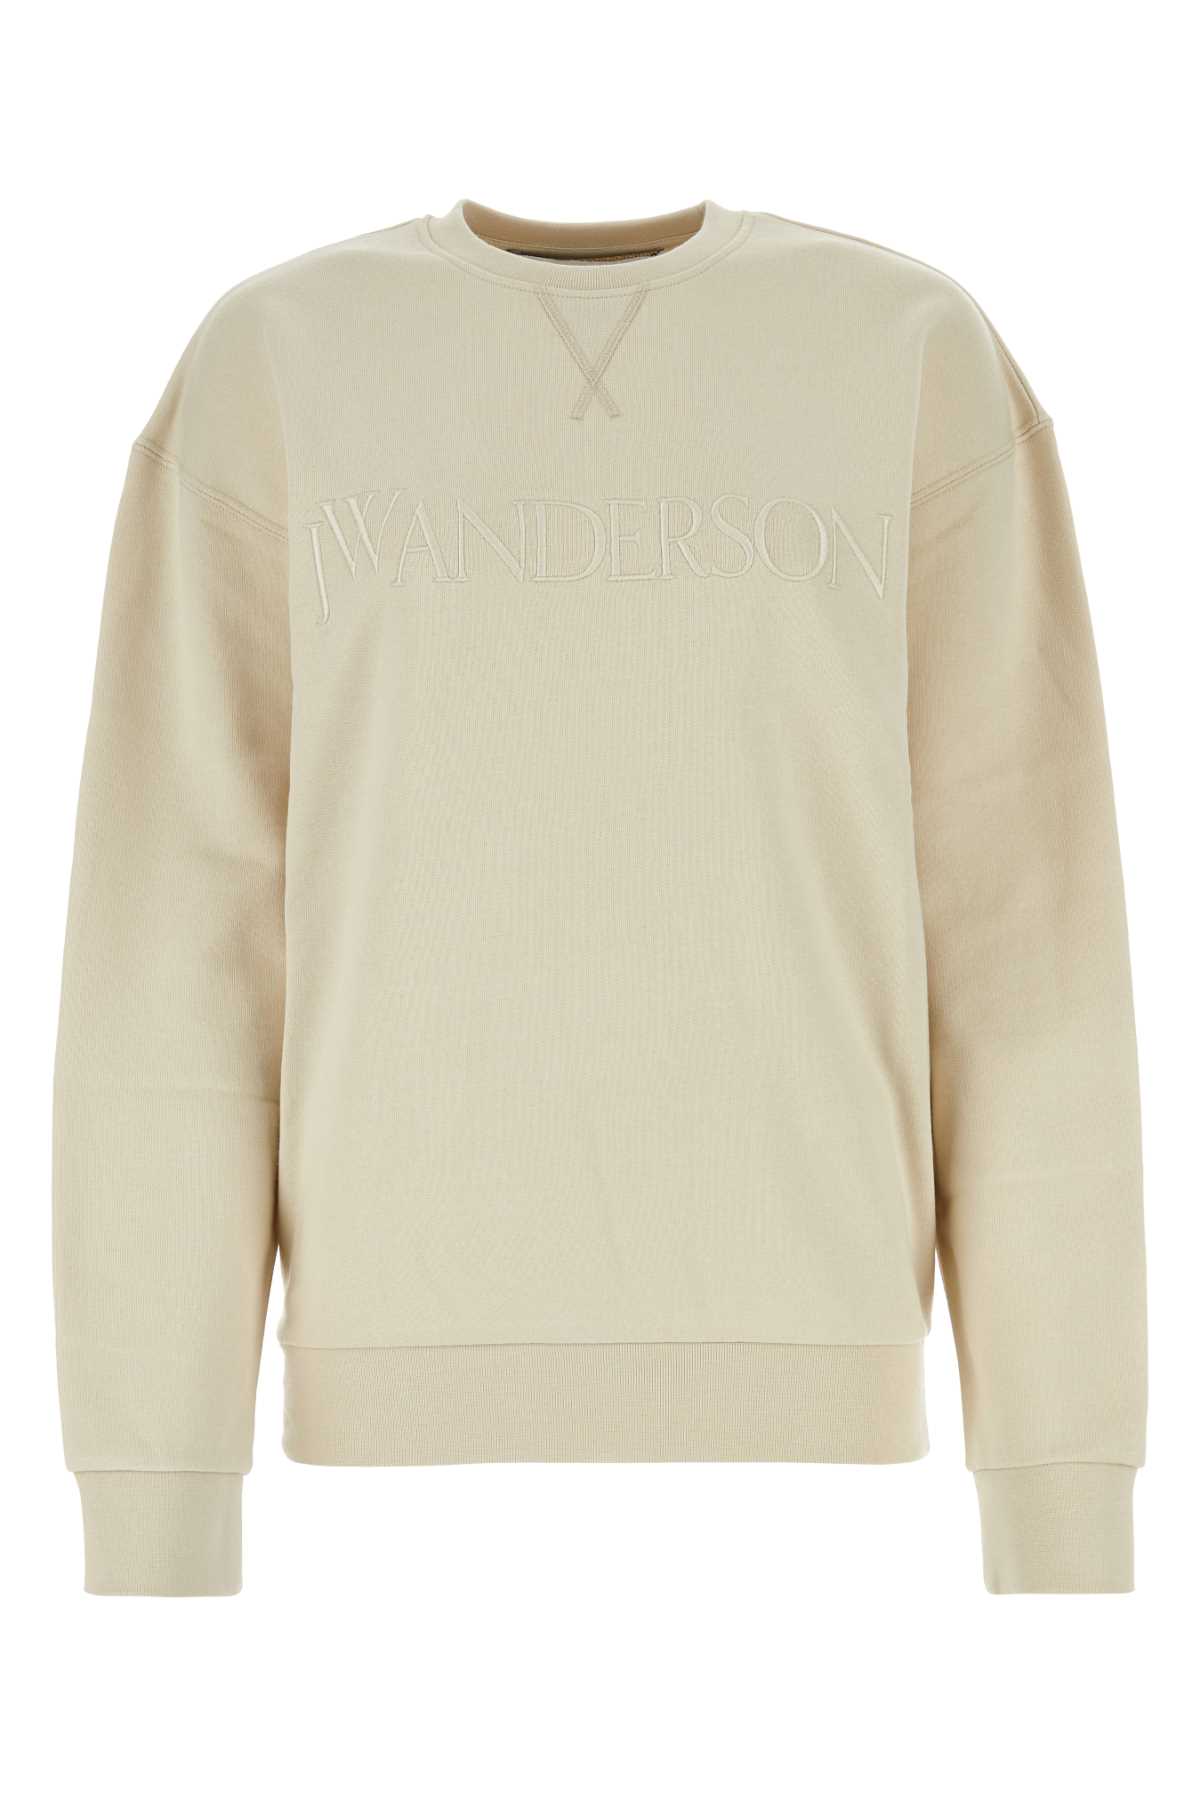 J.W. Anderson Sand Cotton Sweatshirt